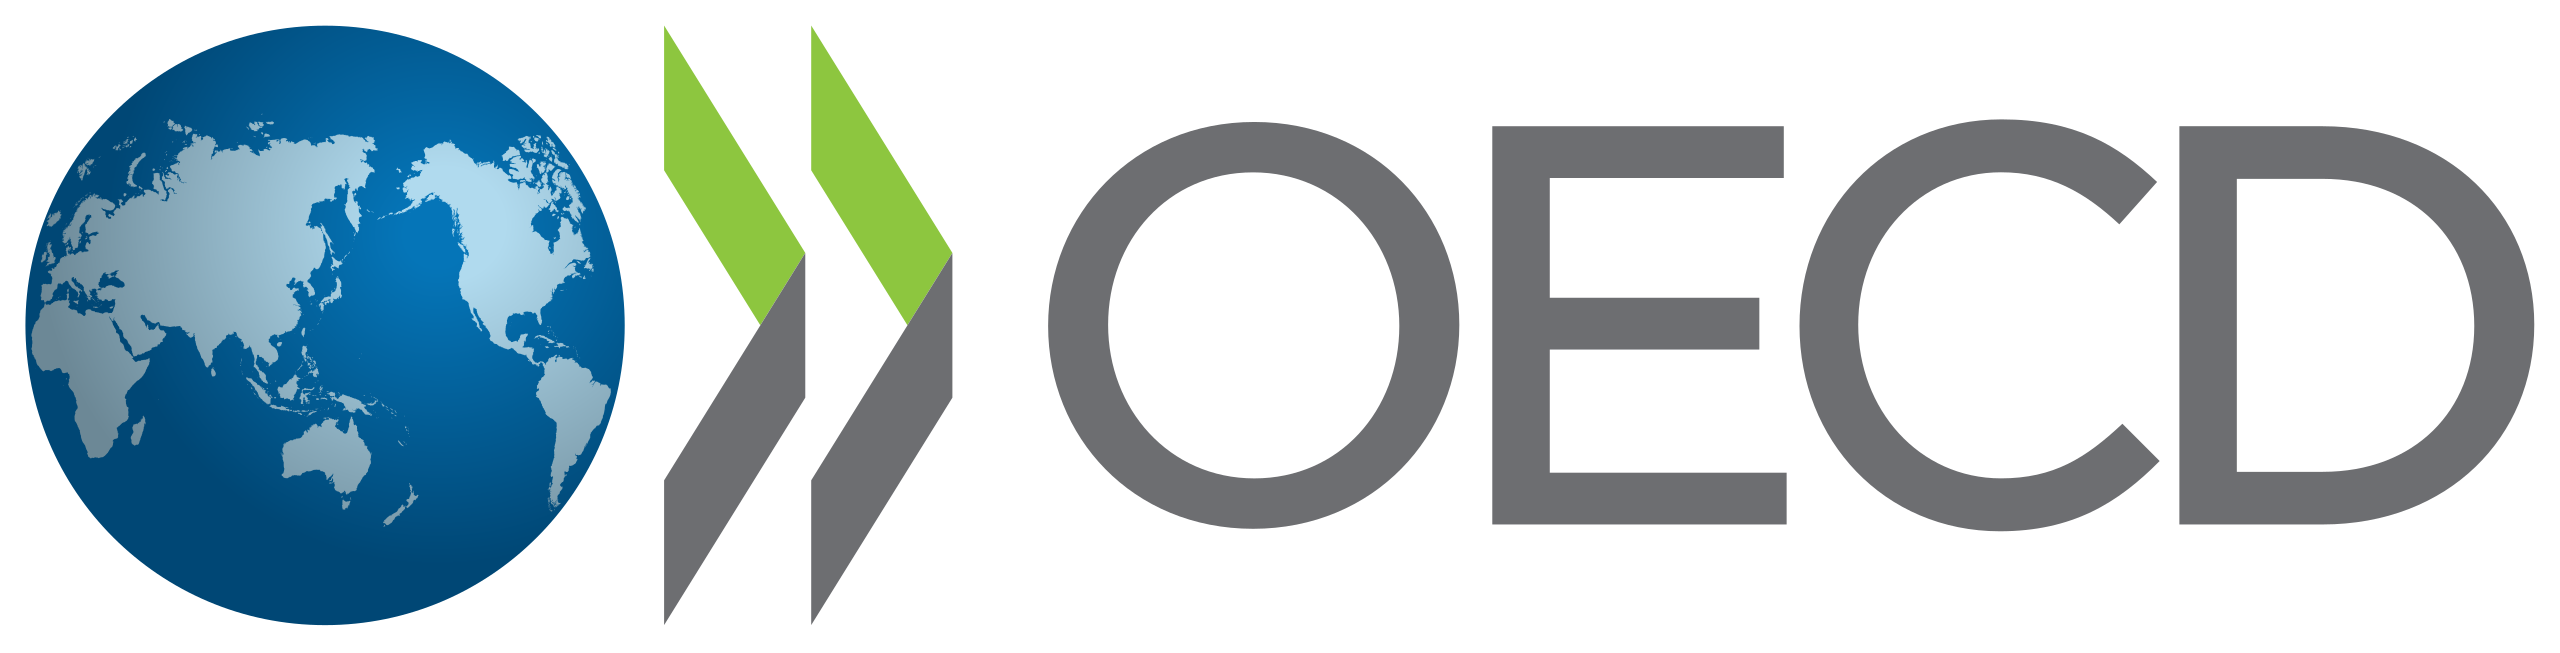 Organisation for Economic Co-operation and Development (OECD) logo